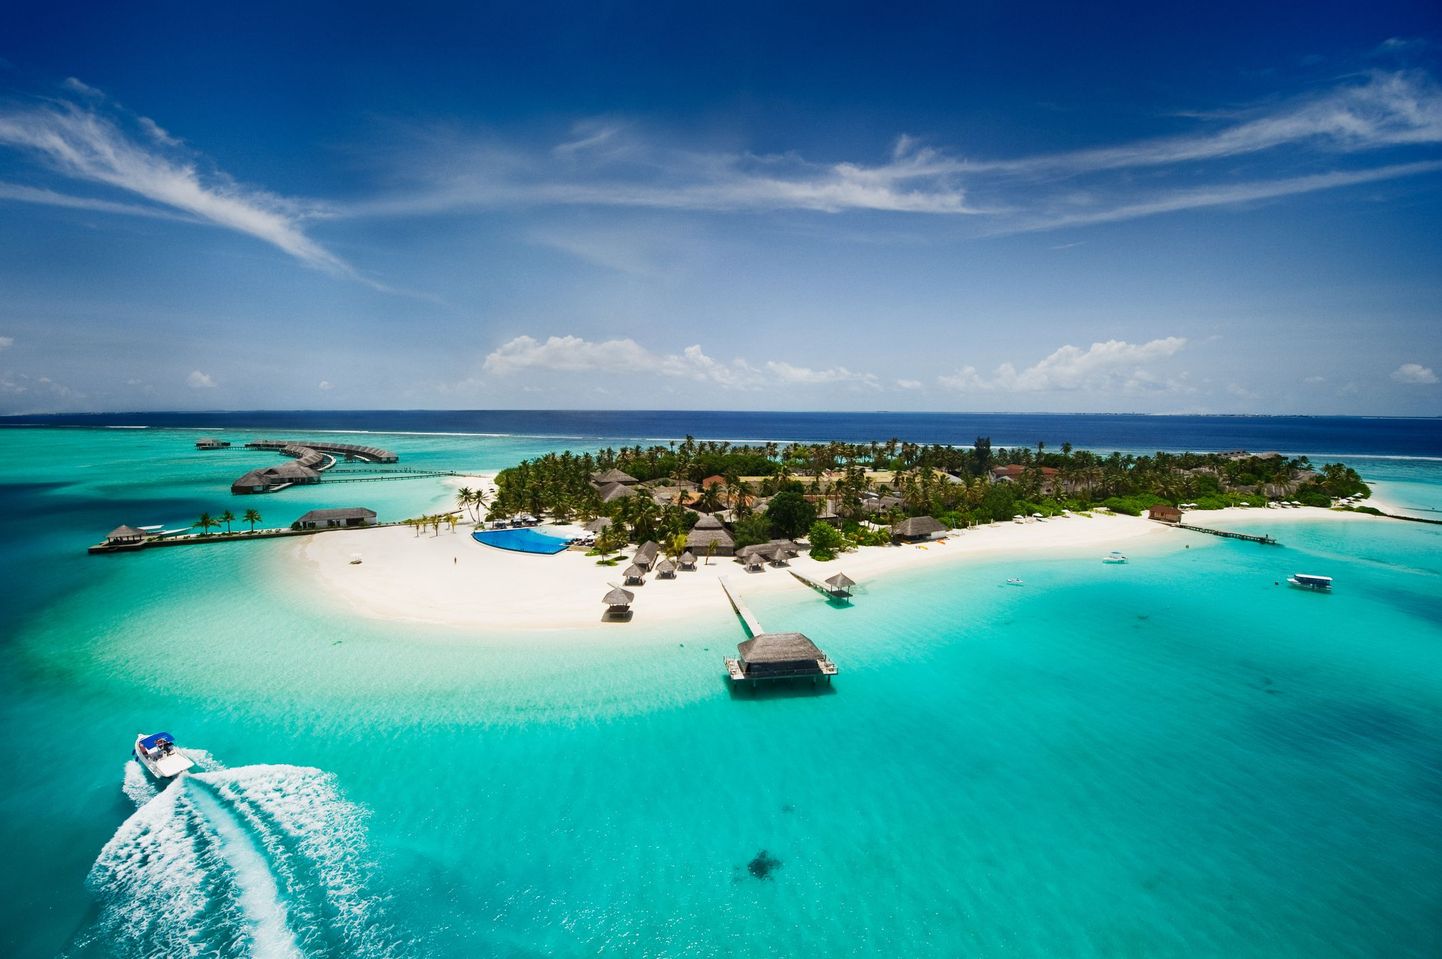 Eesti inimese unistuste sihtkohaks on Maldiivide paradiisisaarestik.